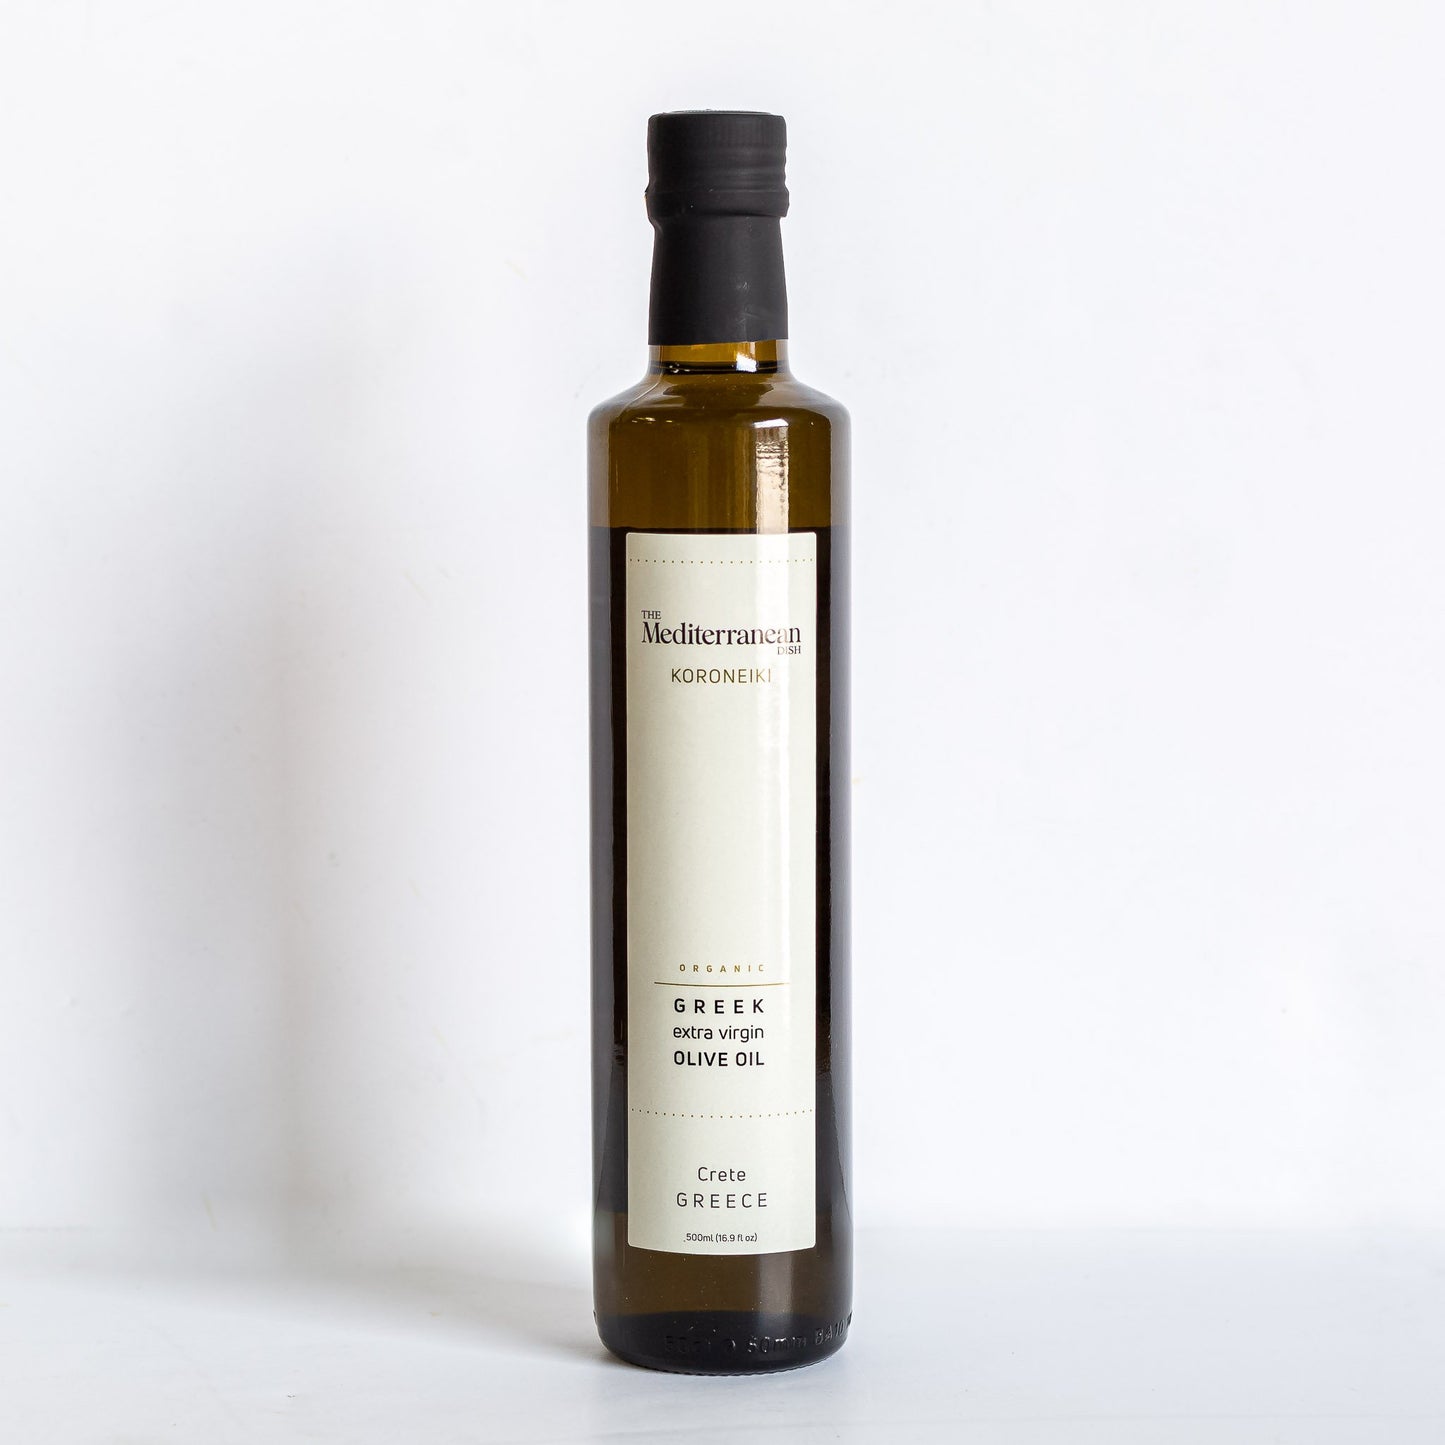 A bottle of koroneiki olive oil